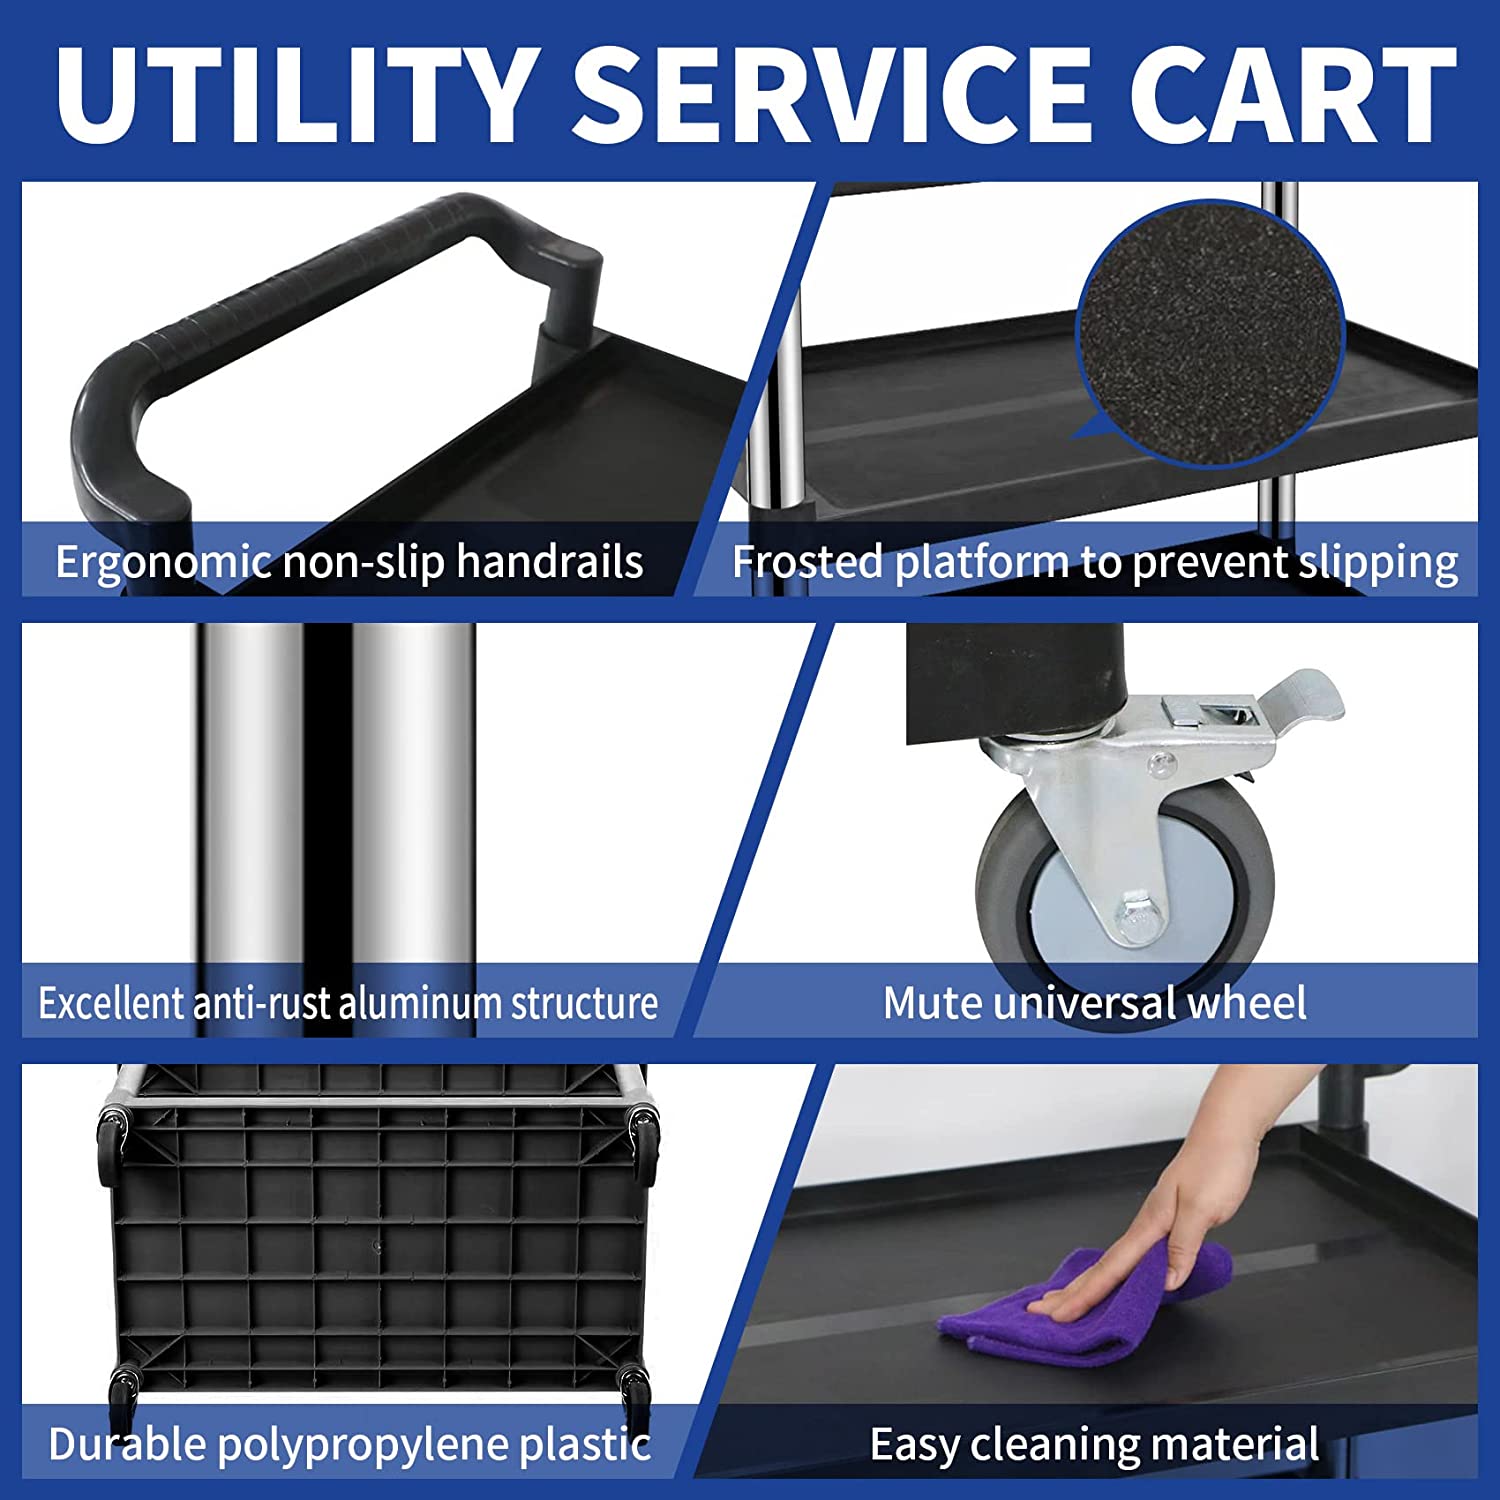 Utility Service Cart